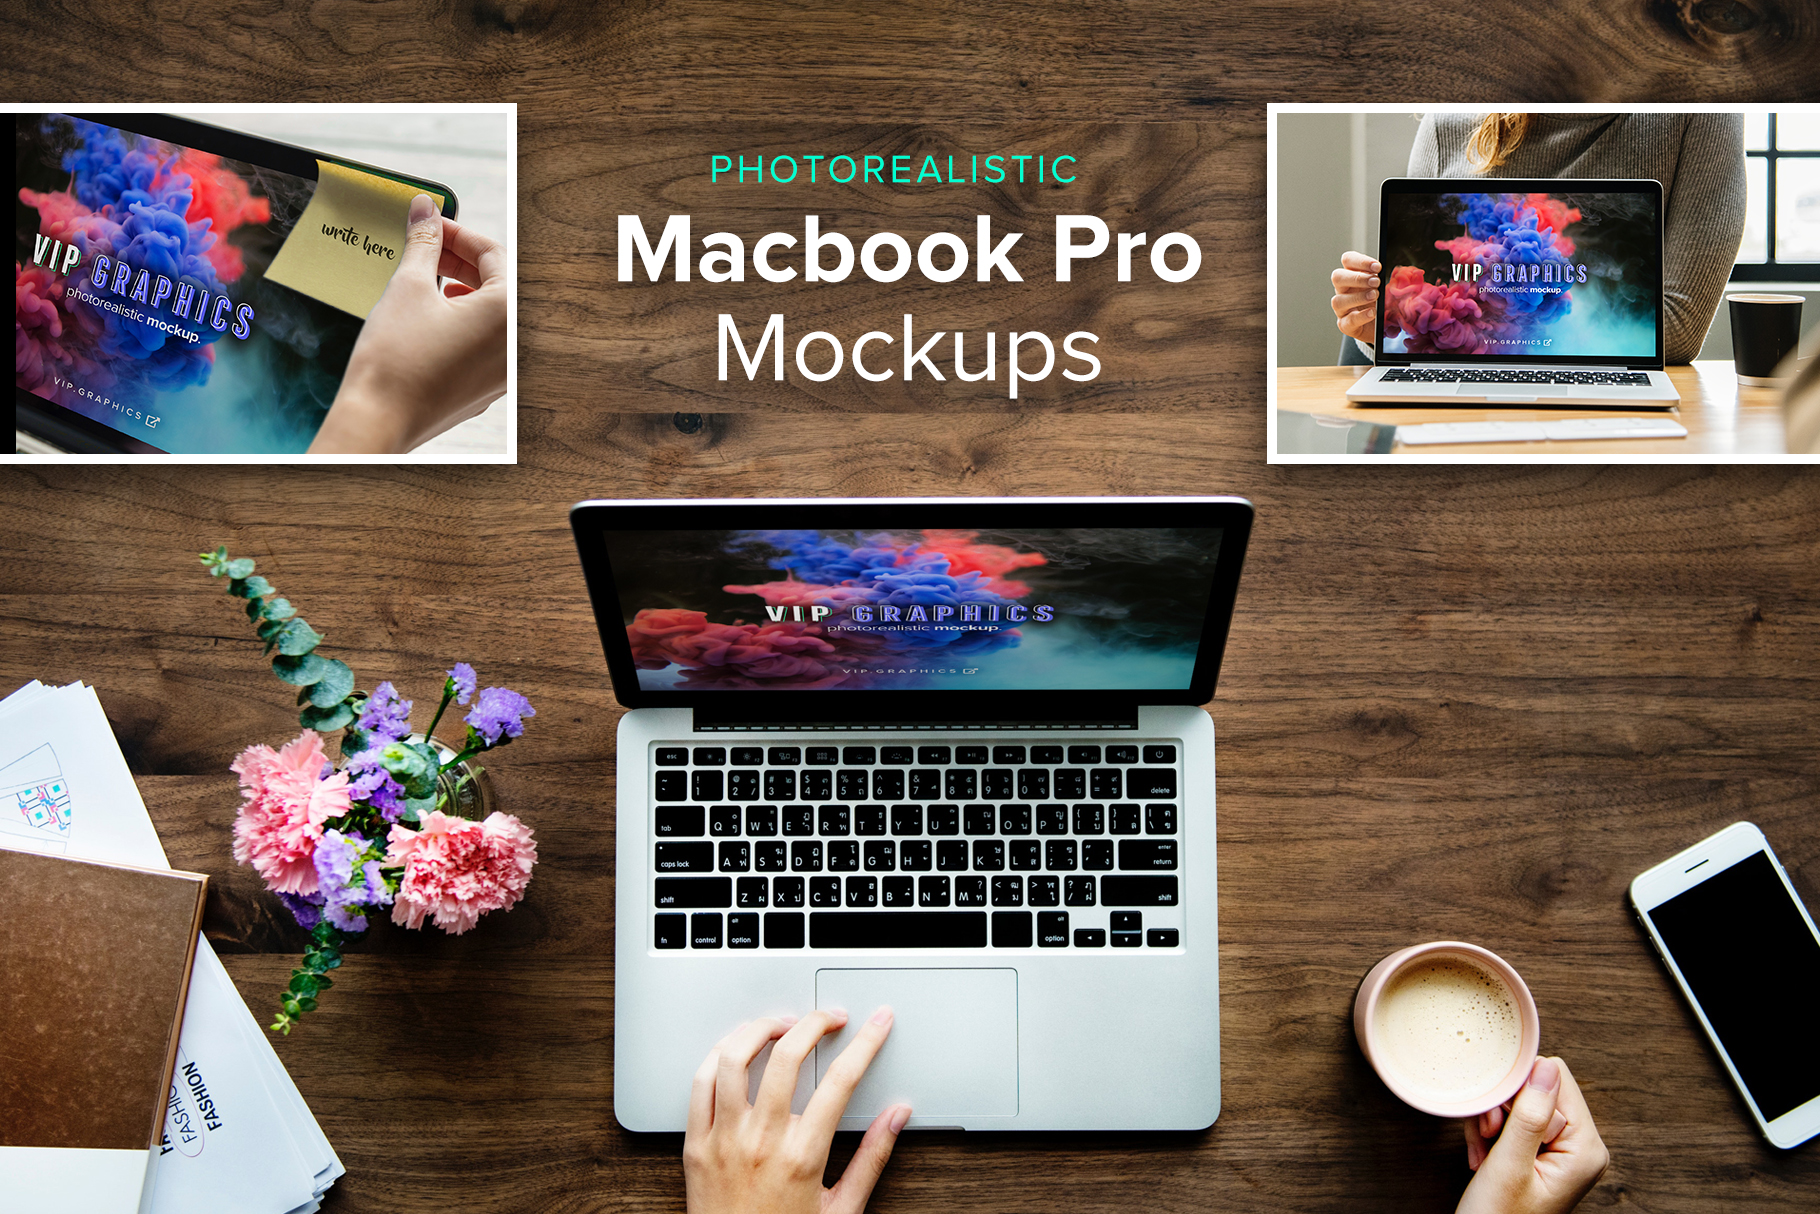 Photorealistic Macbook Mockup Design Freebie .PSD - Laptop Desk Photos | VIP Graphics